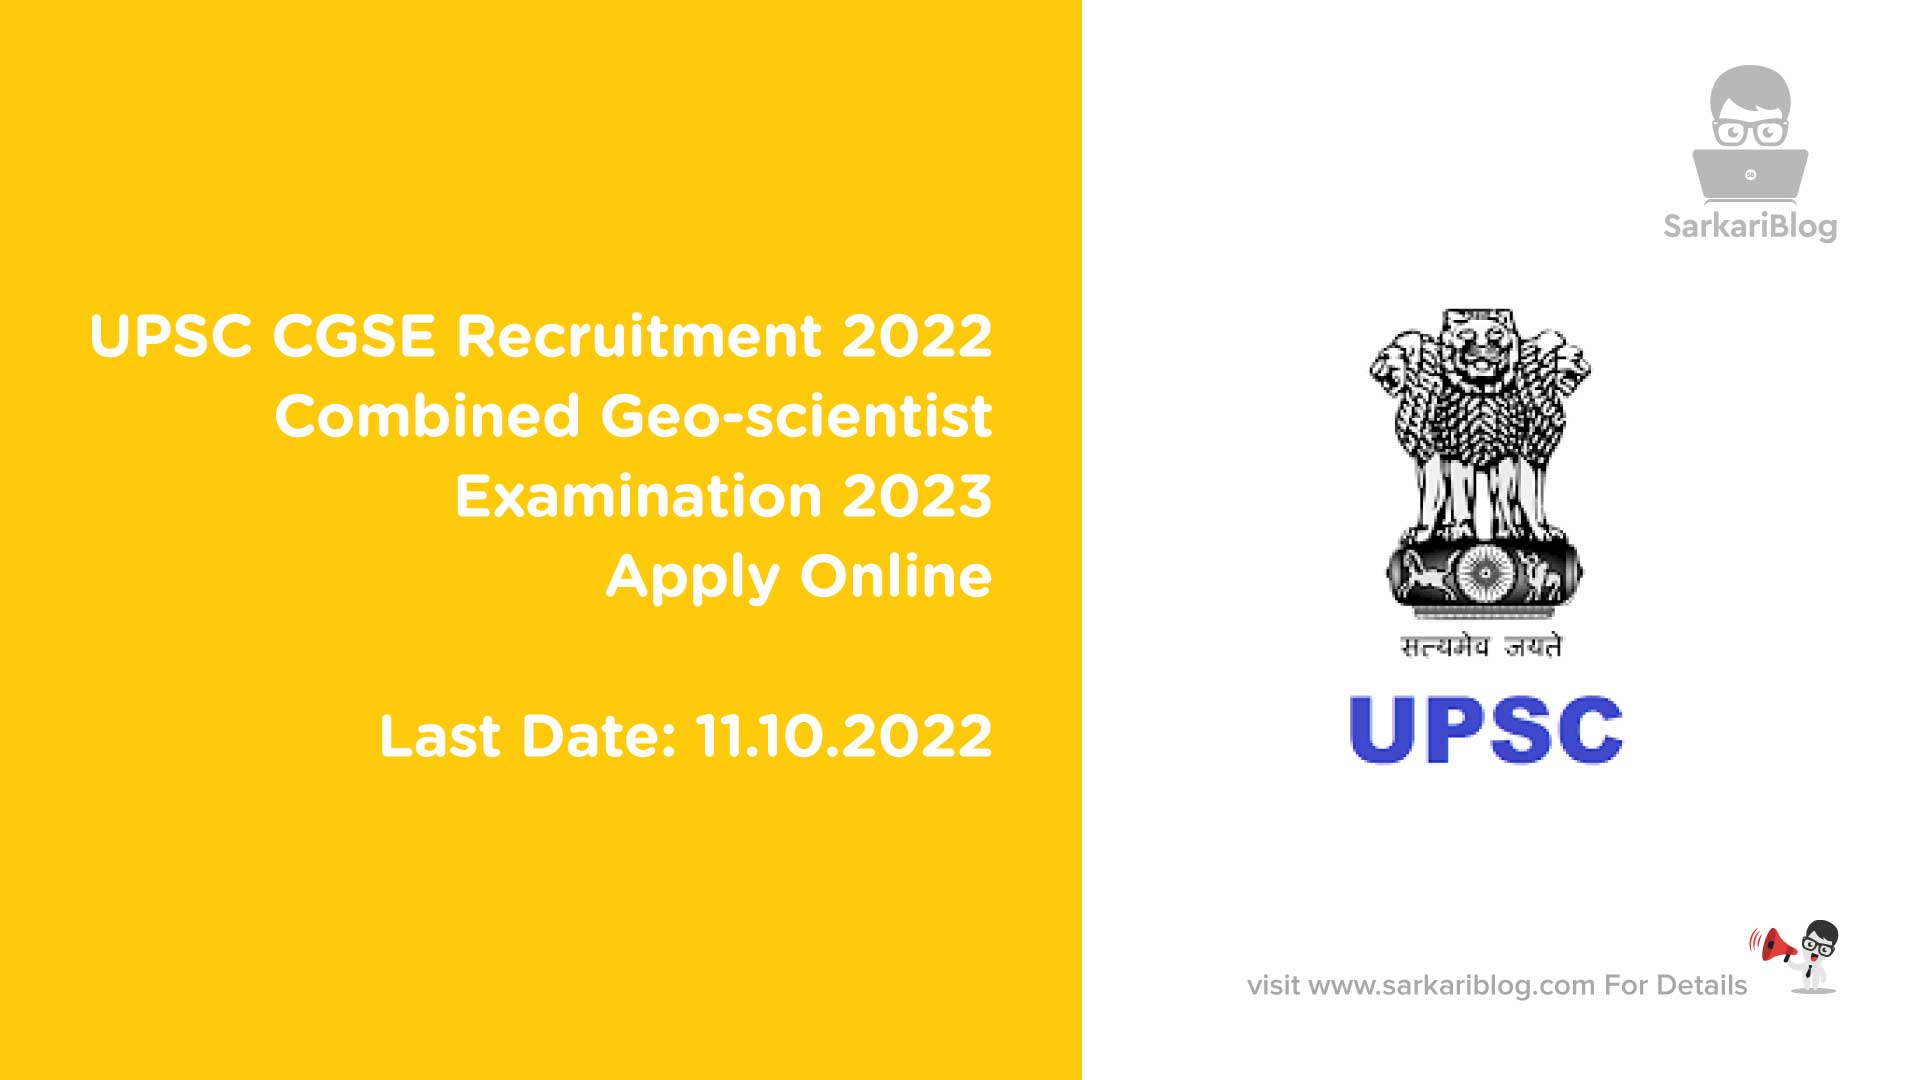 UPSC CGSE Recruitment 2022